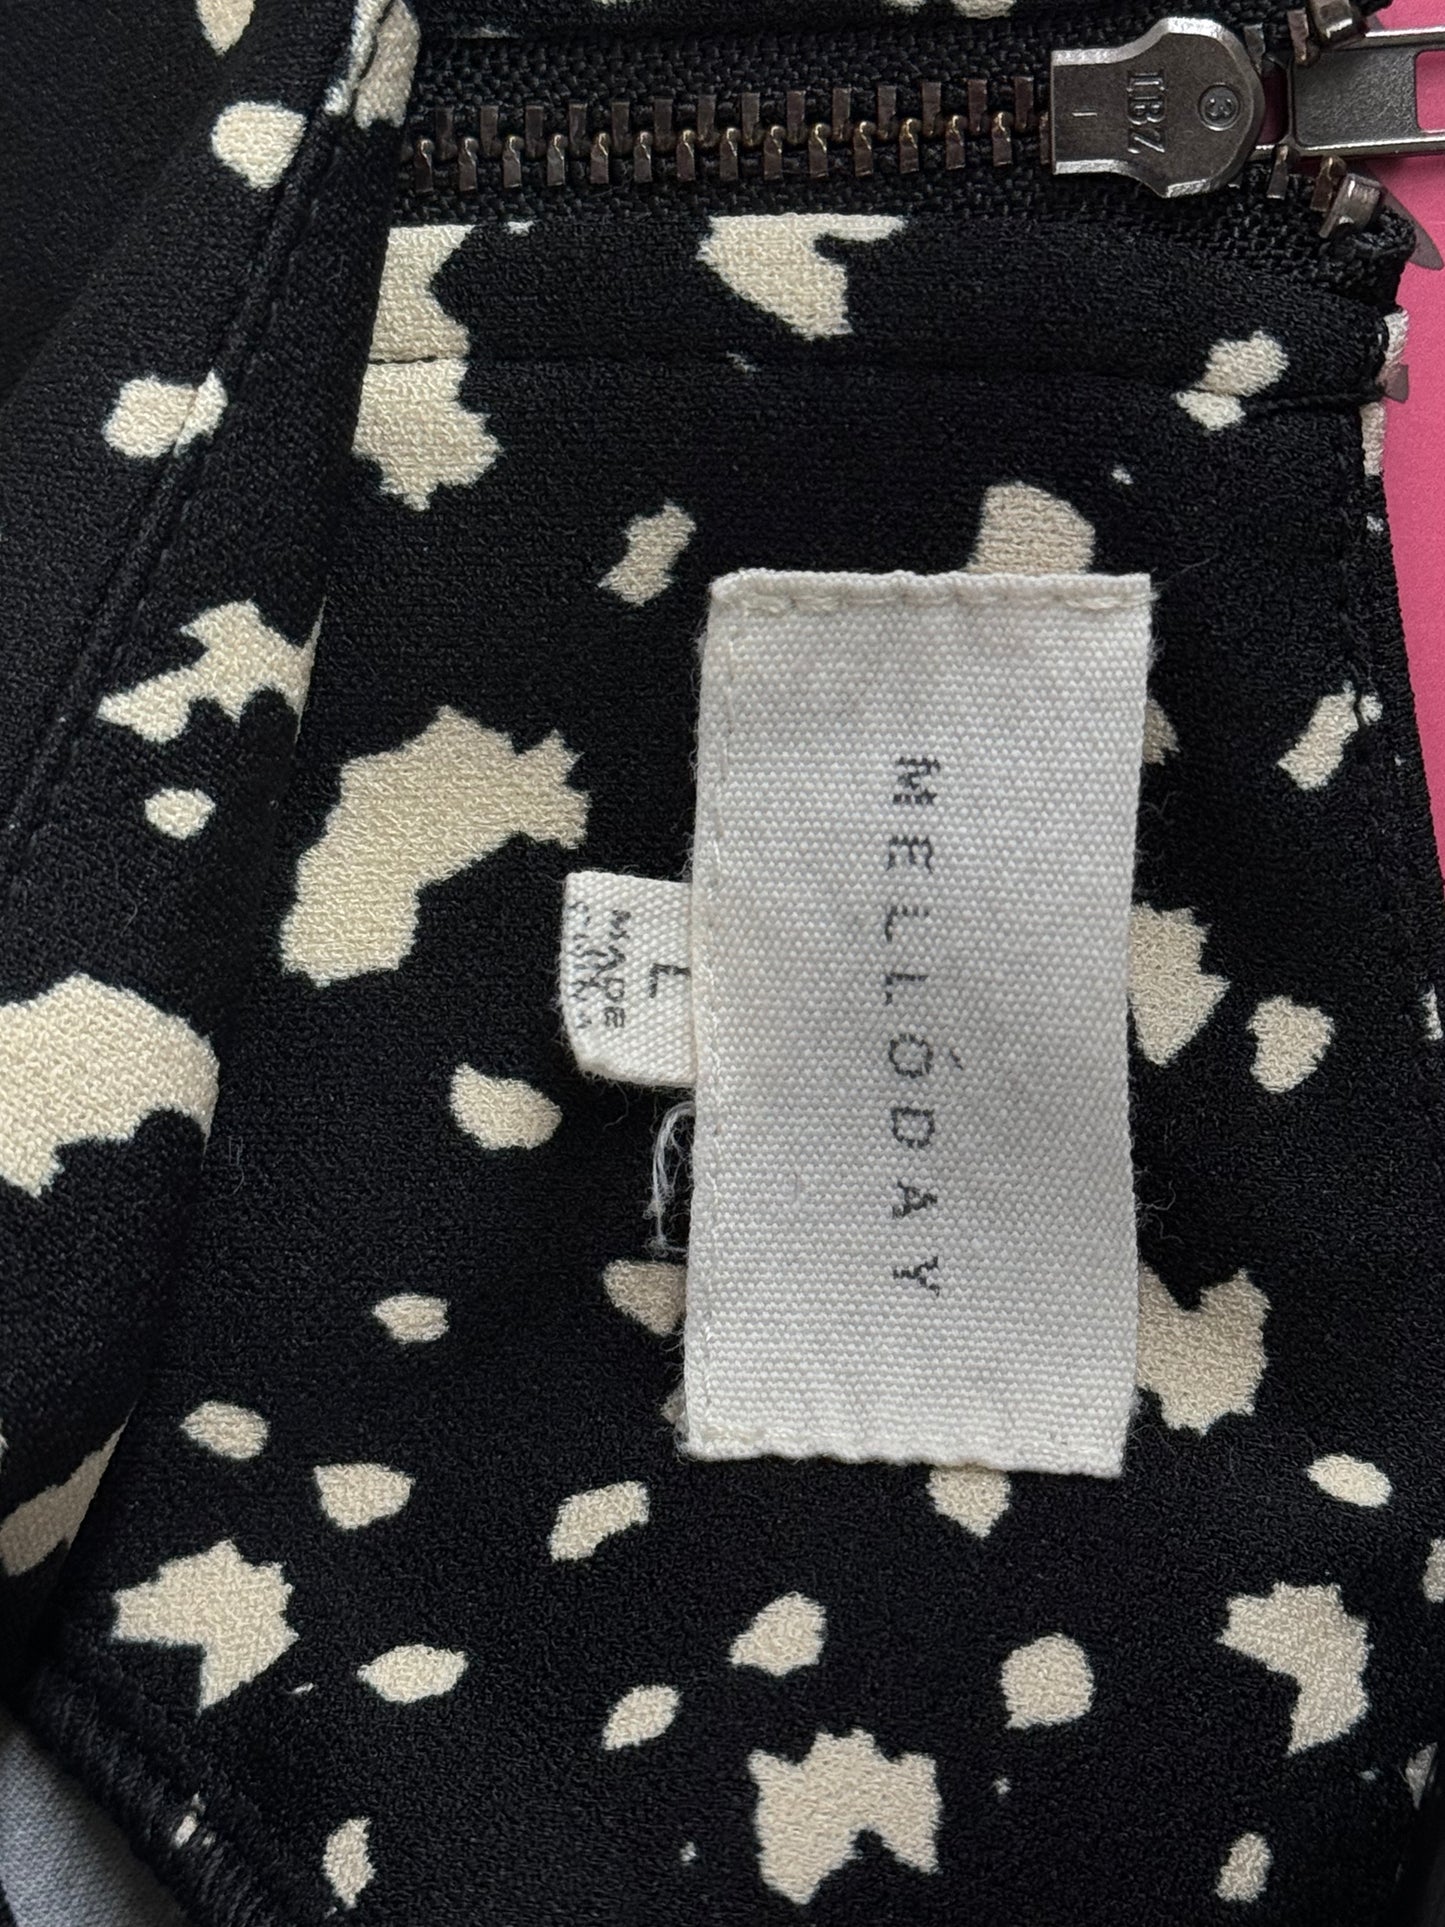 Melloday Women’s Printed Short Sleeve Top Black/Cream - Size Large